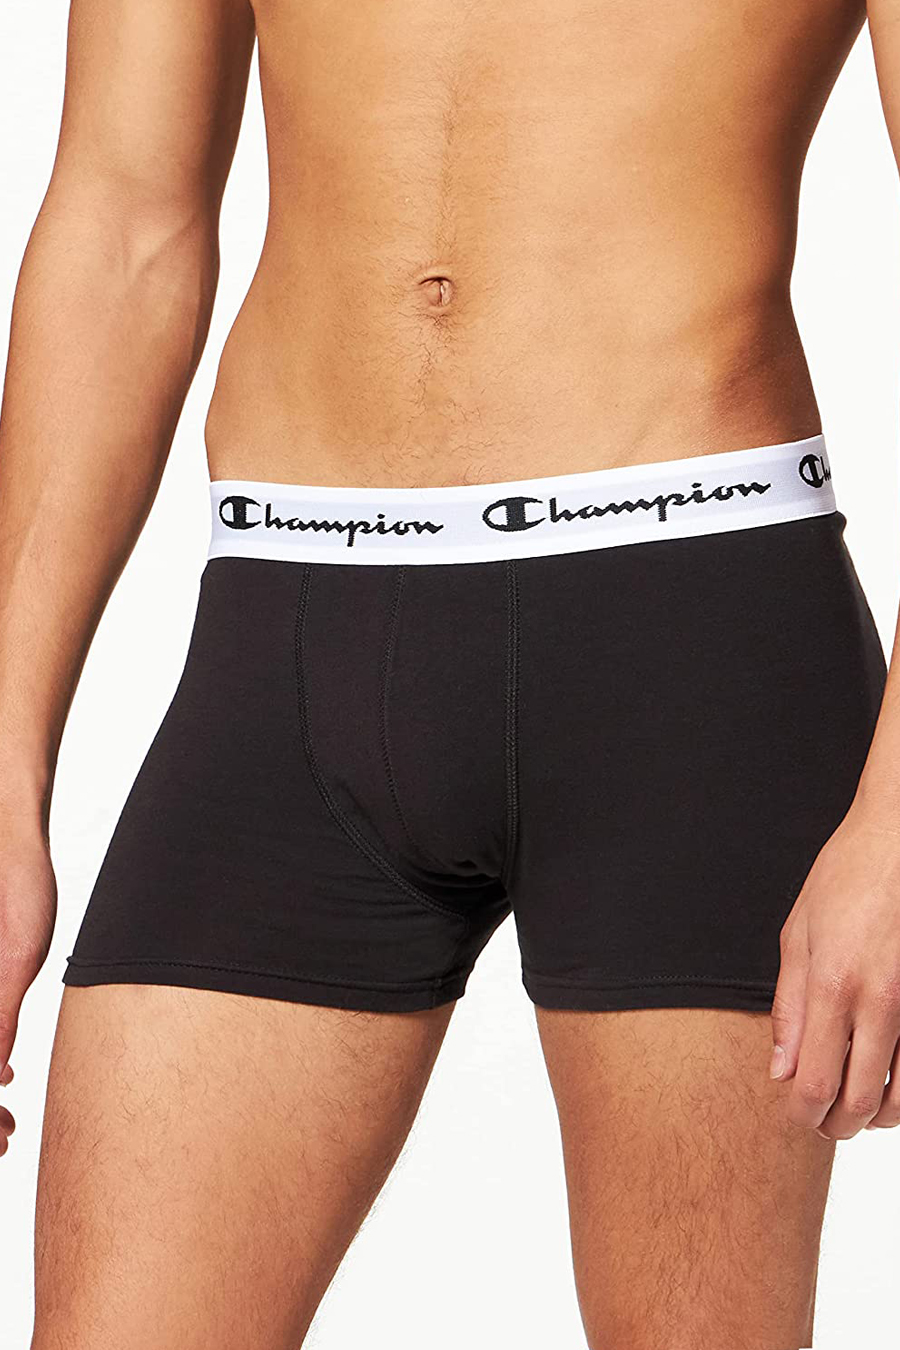 6pack Kappa boxer shorts timeless mens underwear black